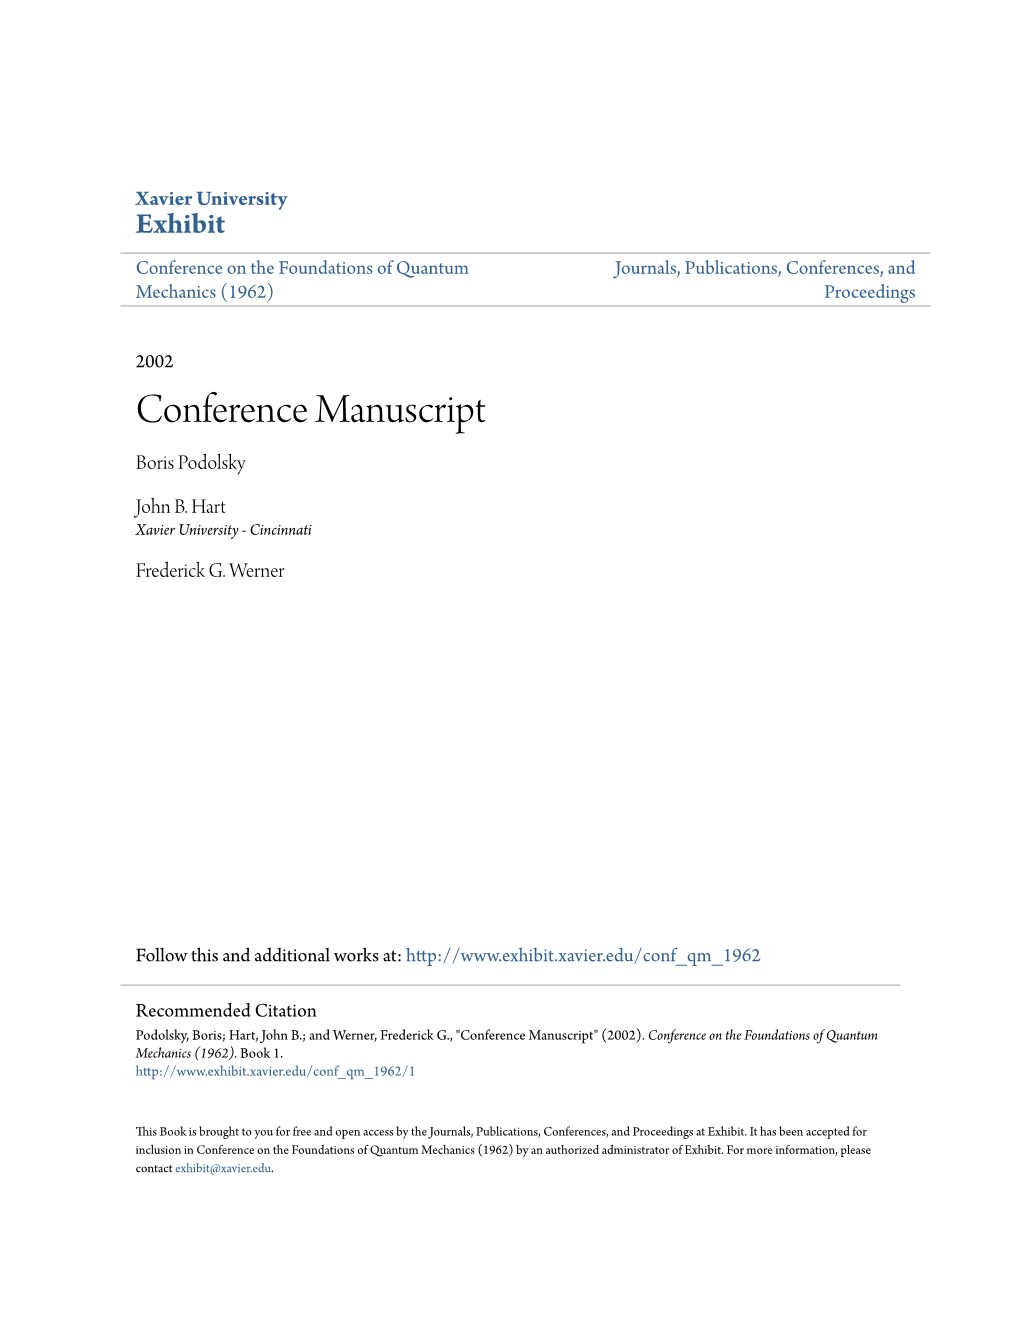 Conference Manuscript Boris Podolsky